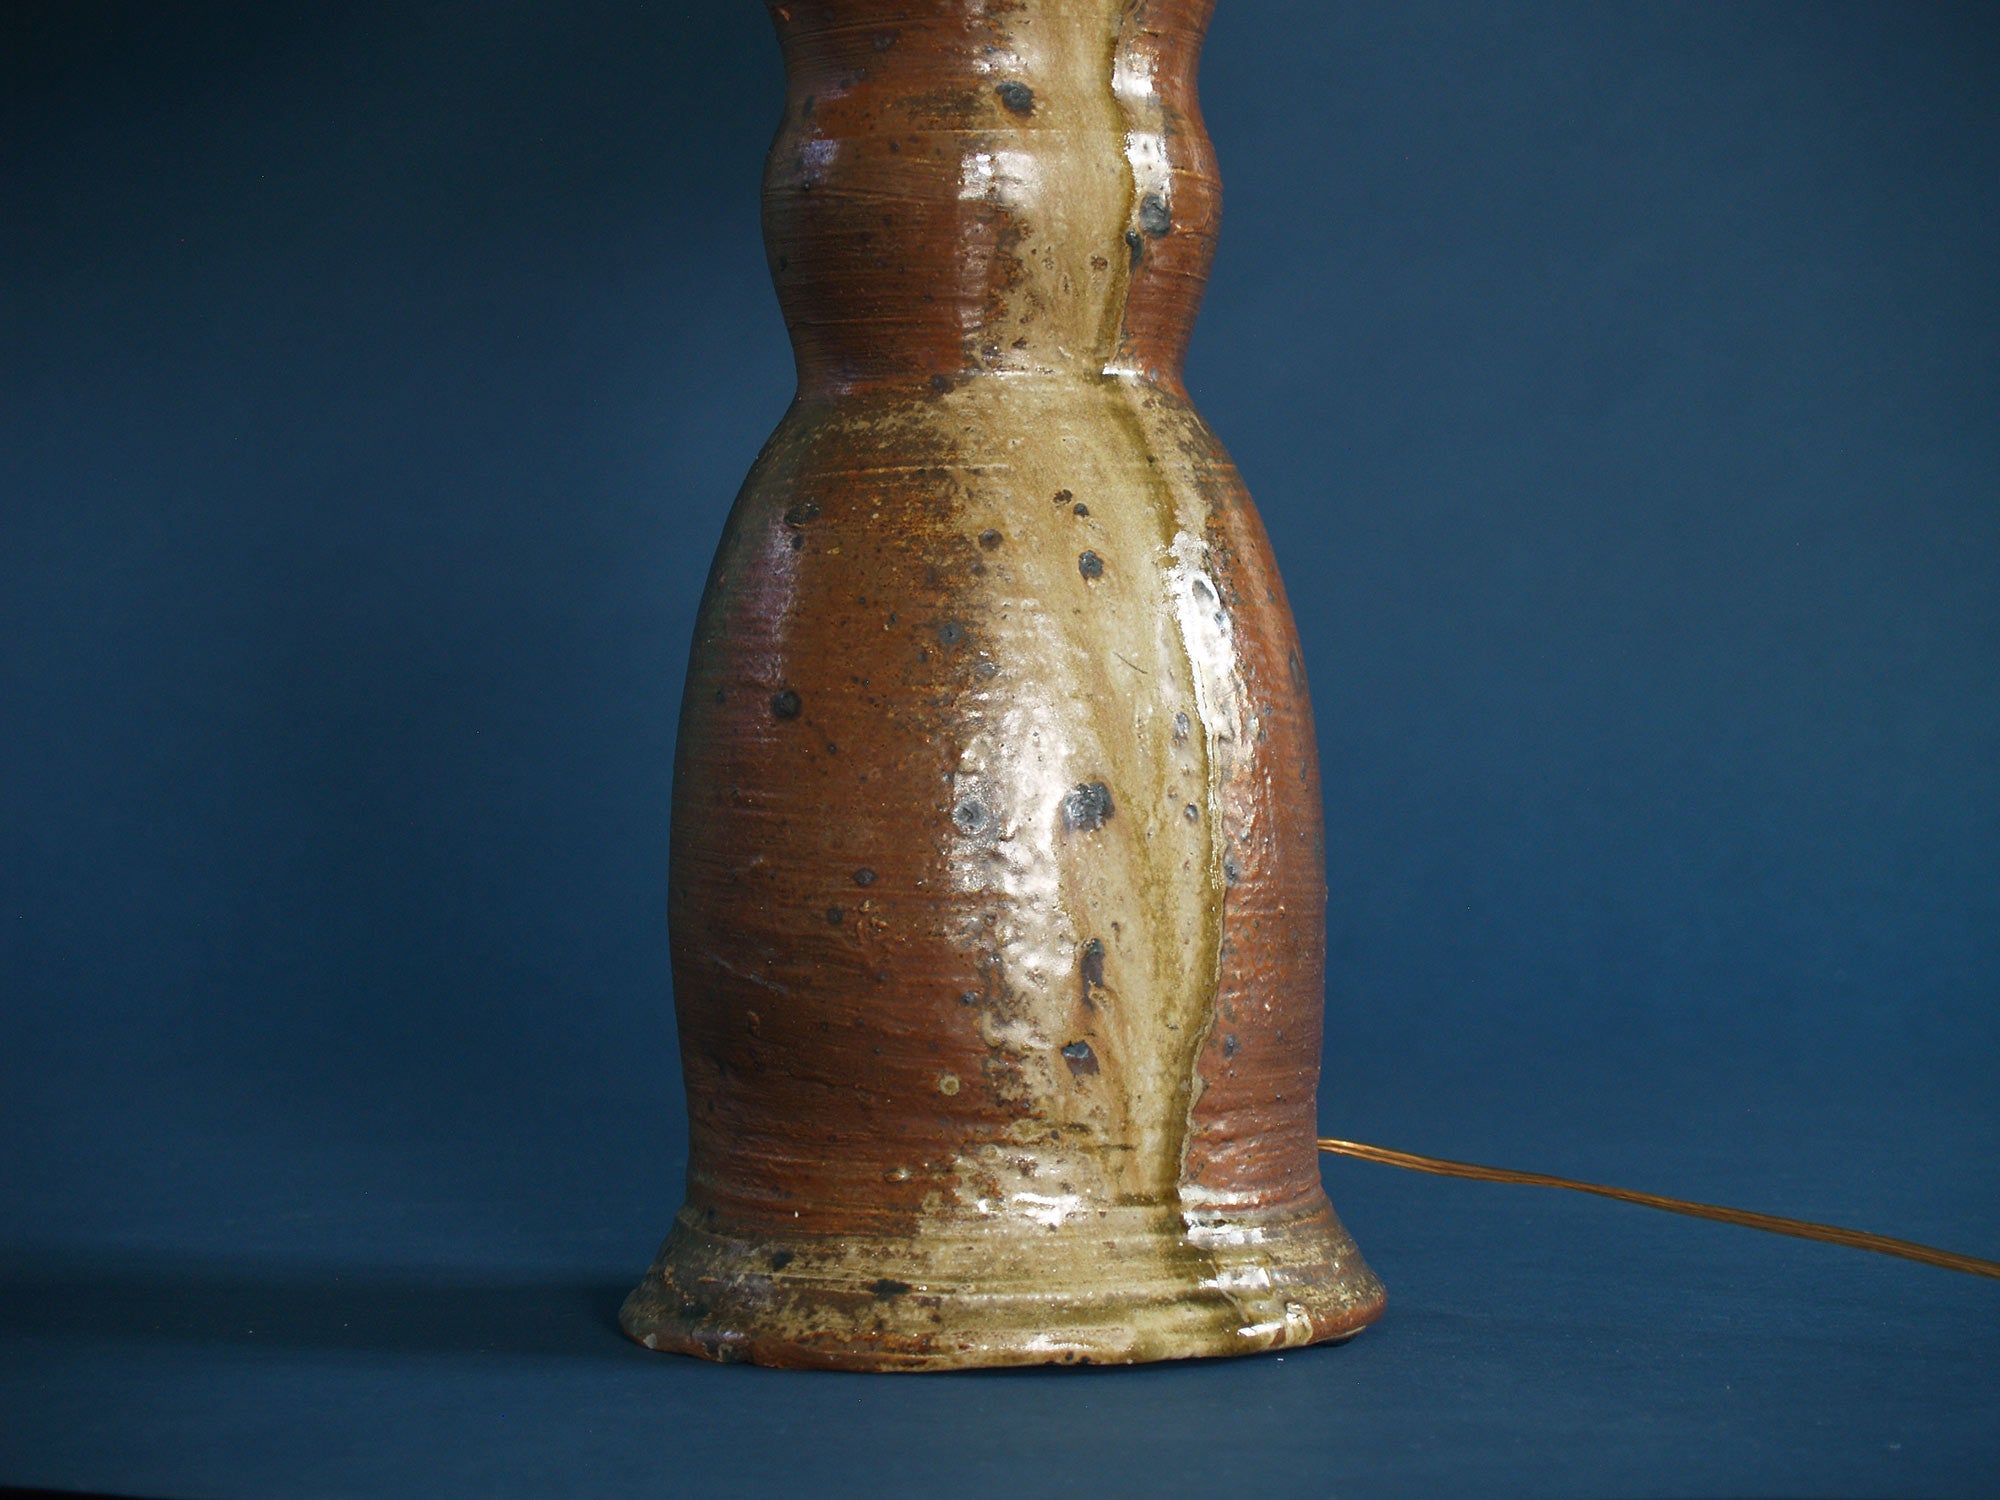 Lampe anthropomorphe en grès de La Borne, France (vers 1955)..Anthropomorphic stoneware lamp from La Borne, France (circa 1955)